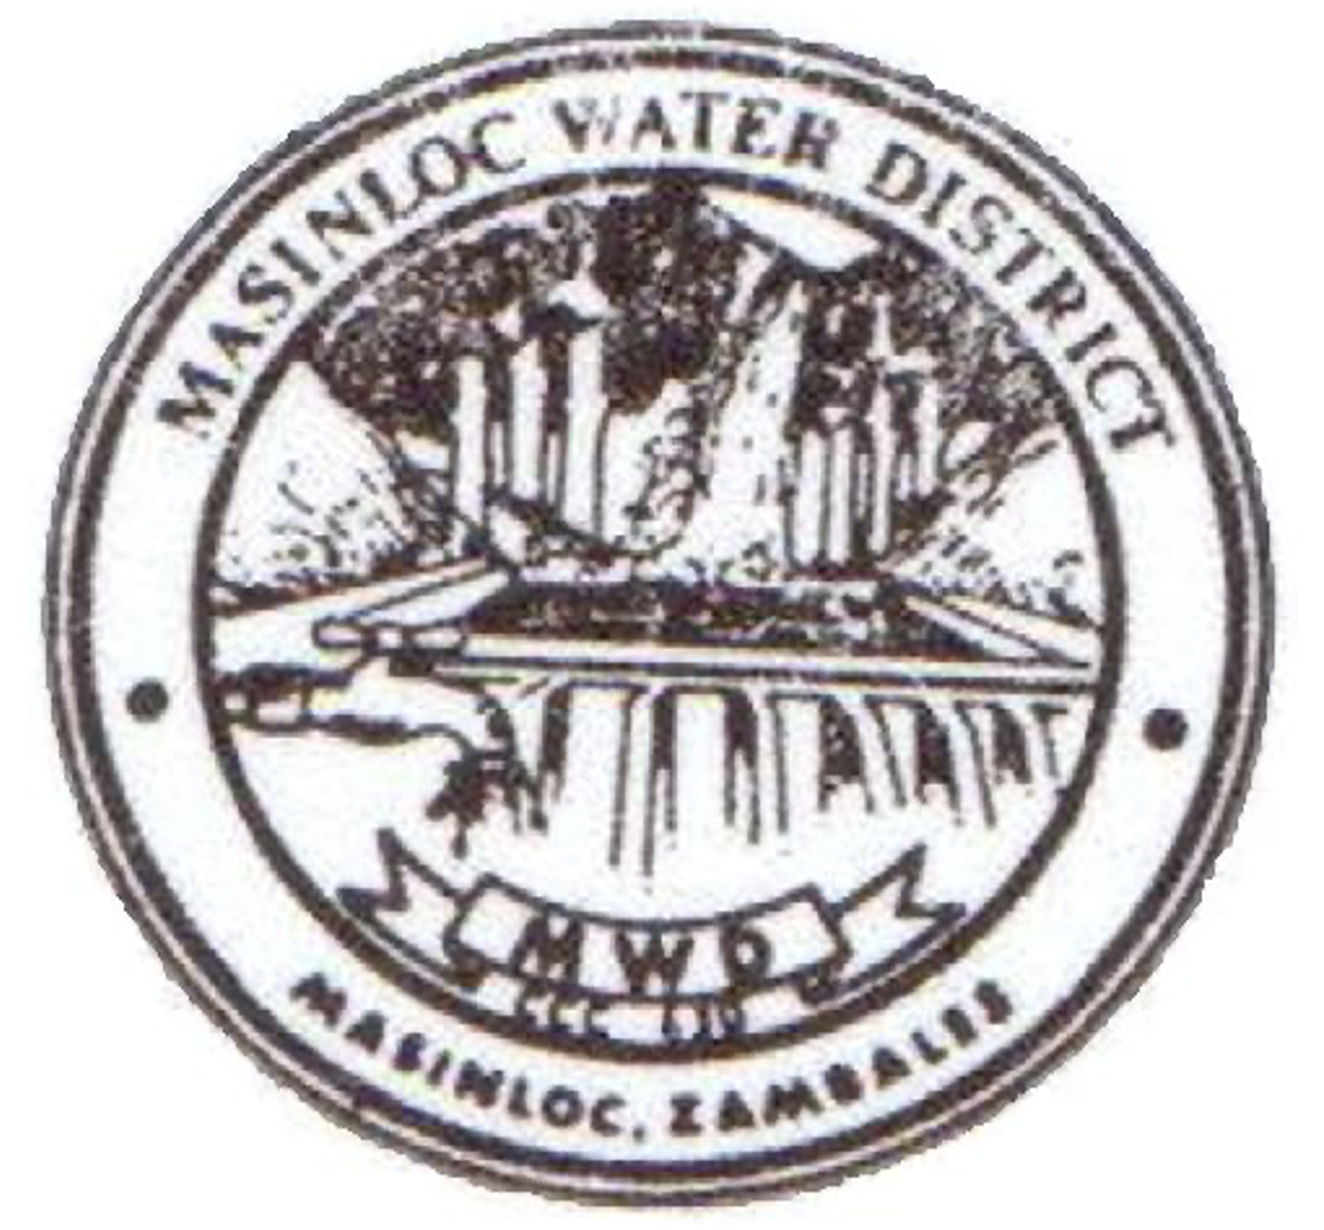 MASINLOC WATER DISTRICT